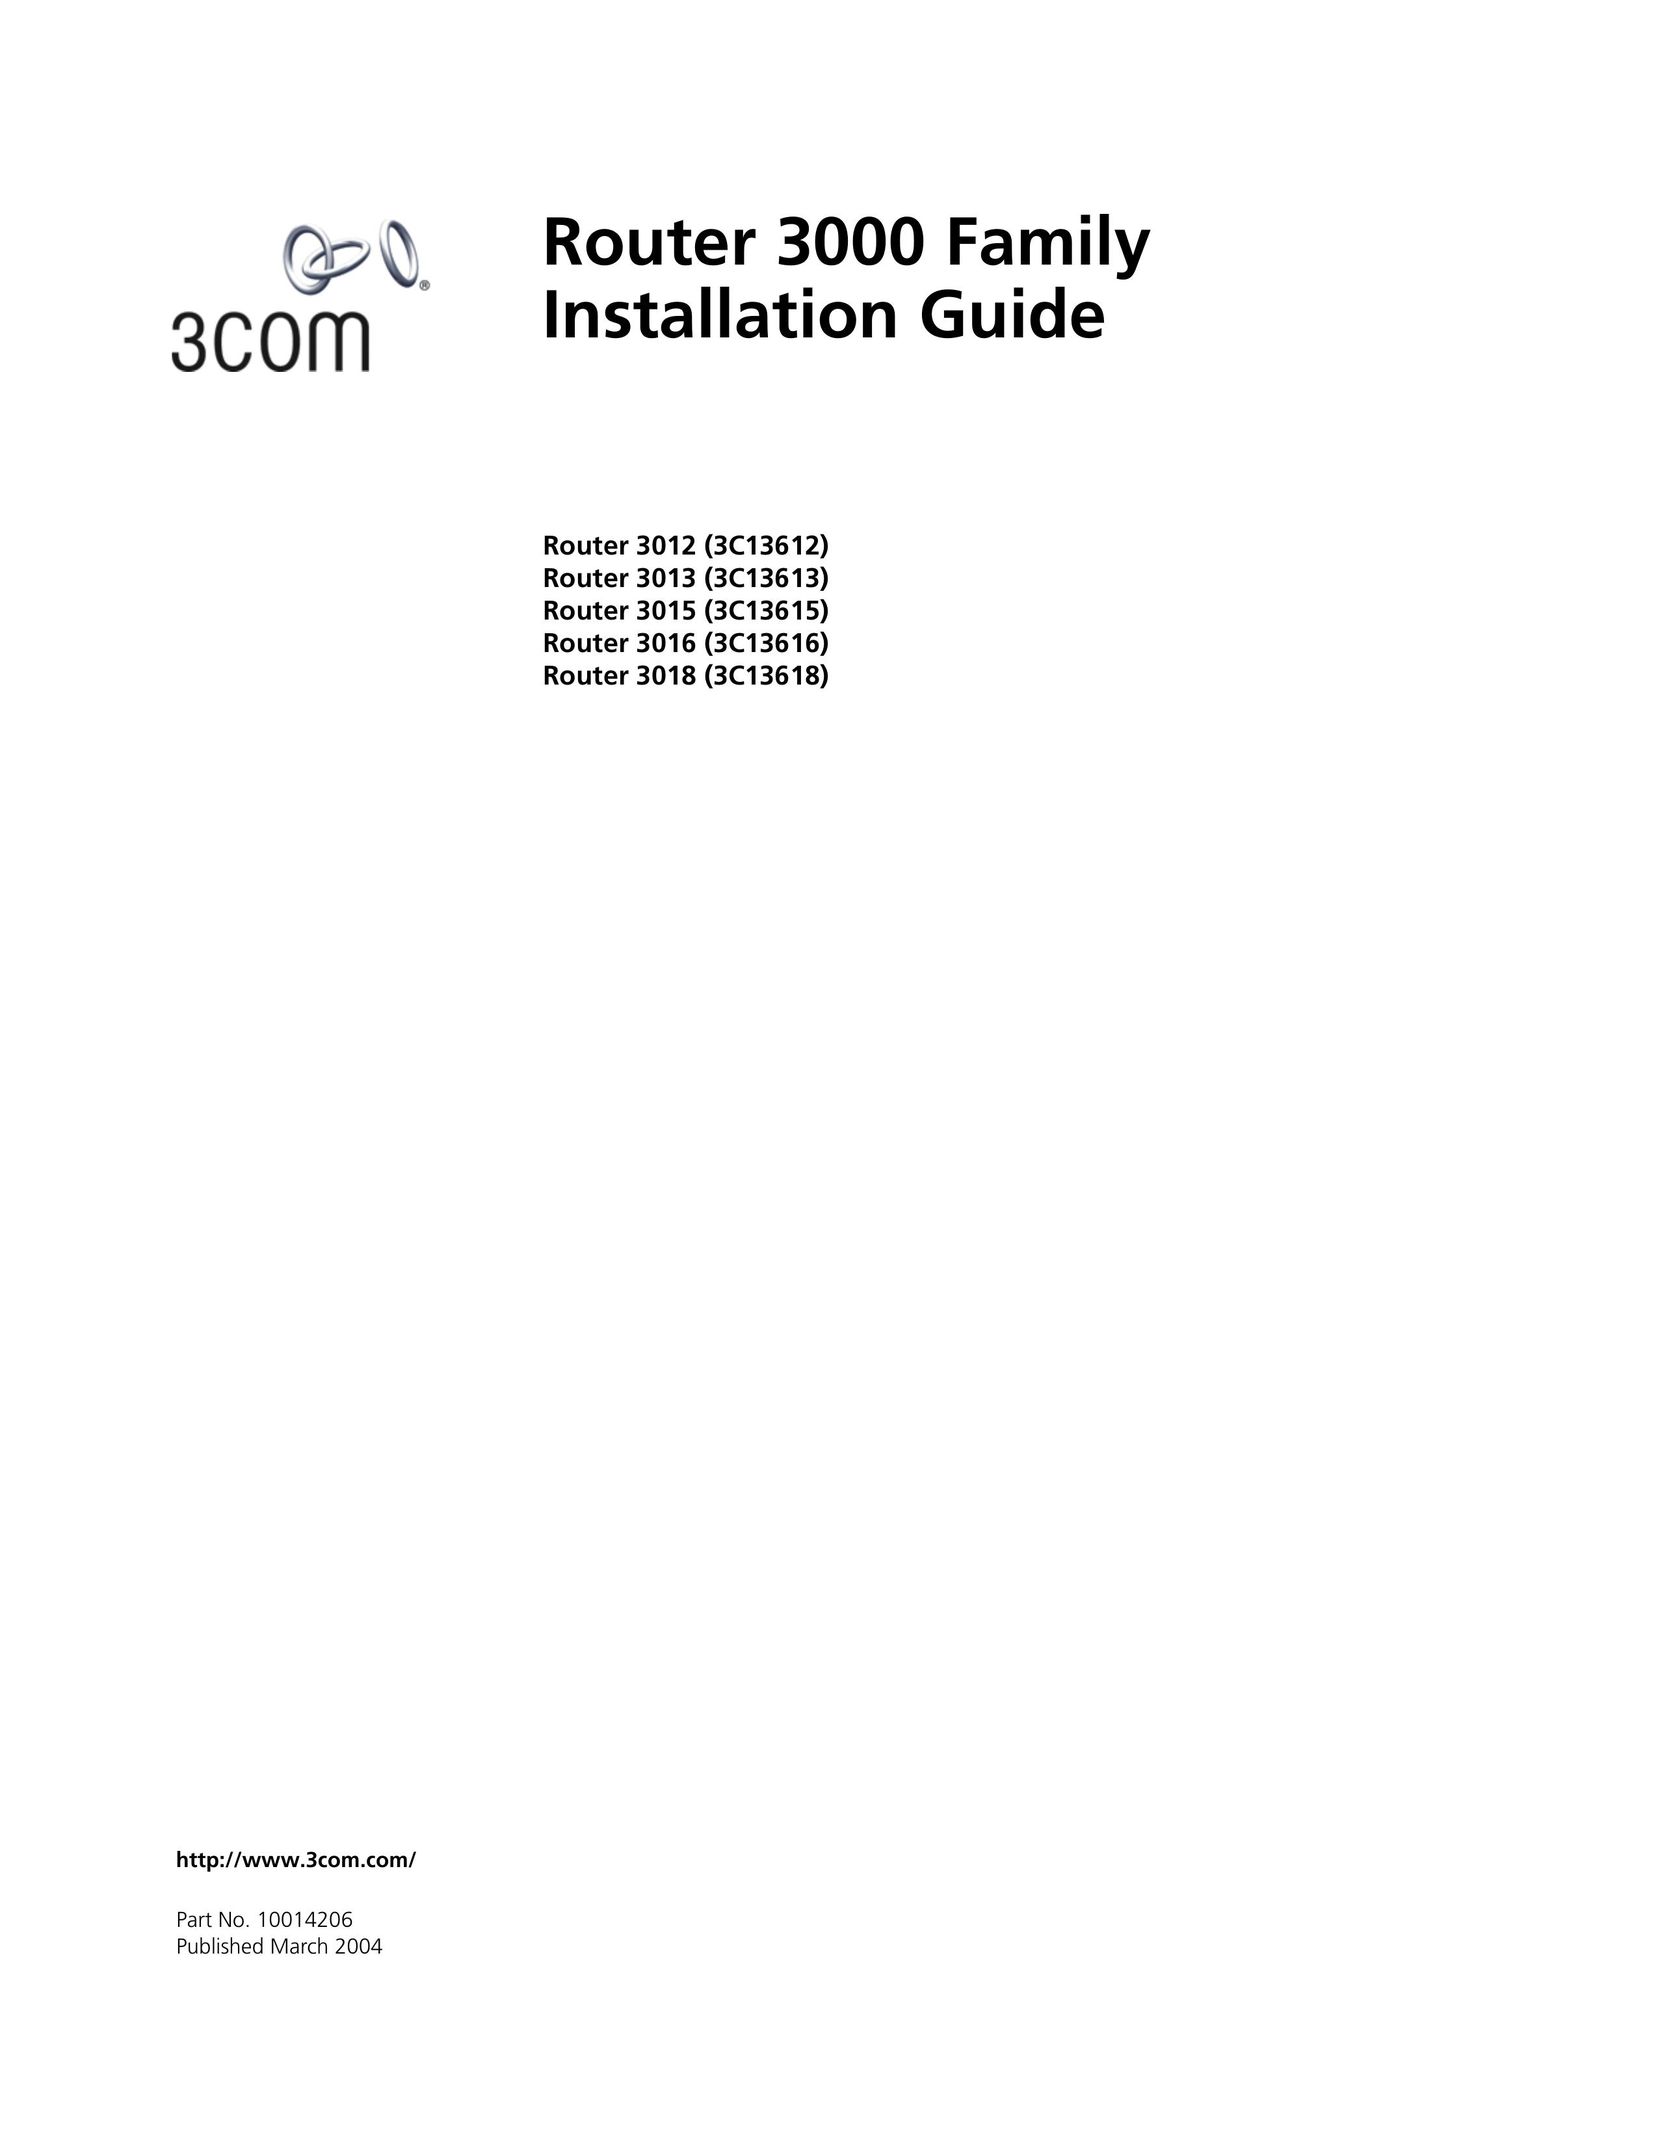 3Com 3015 (3C13615) Saw User Manual